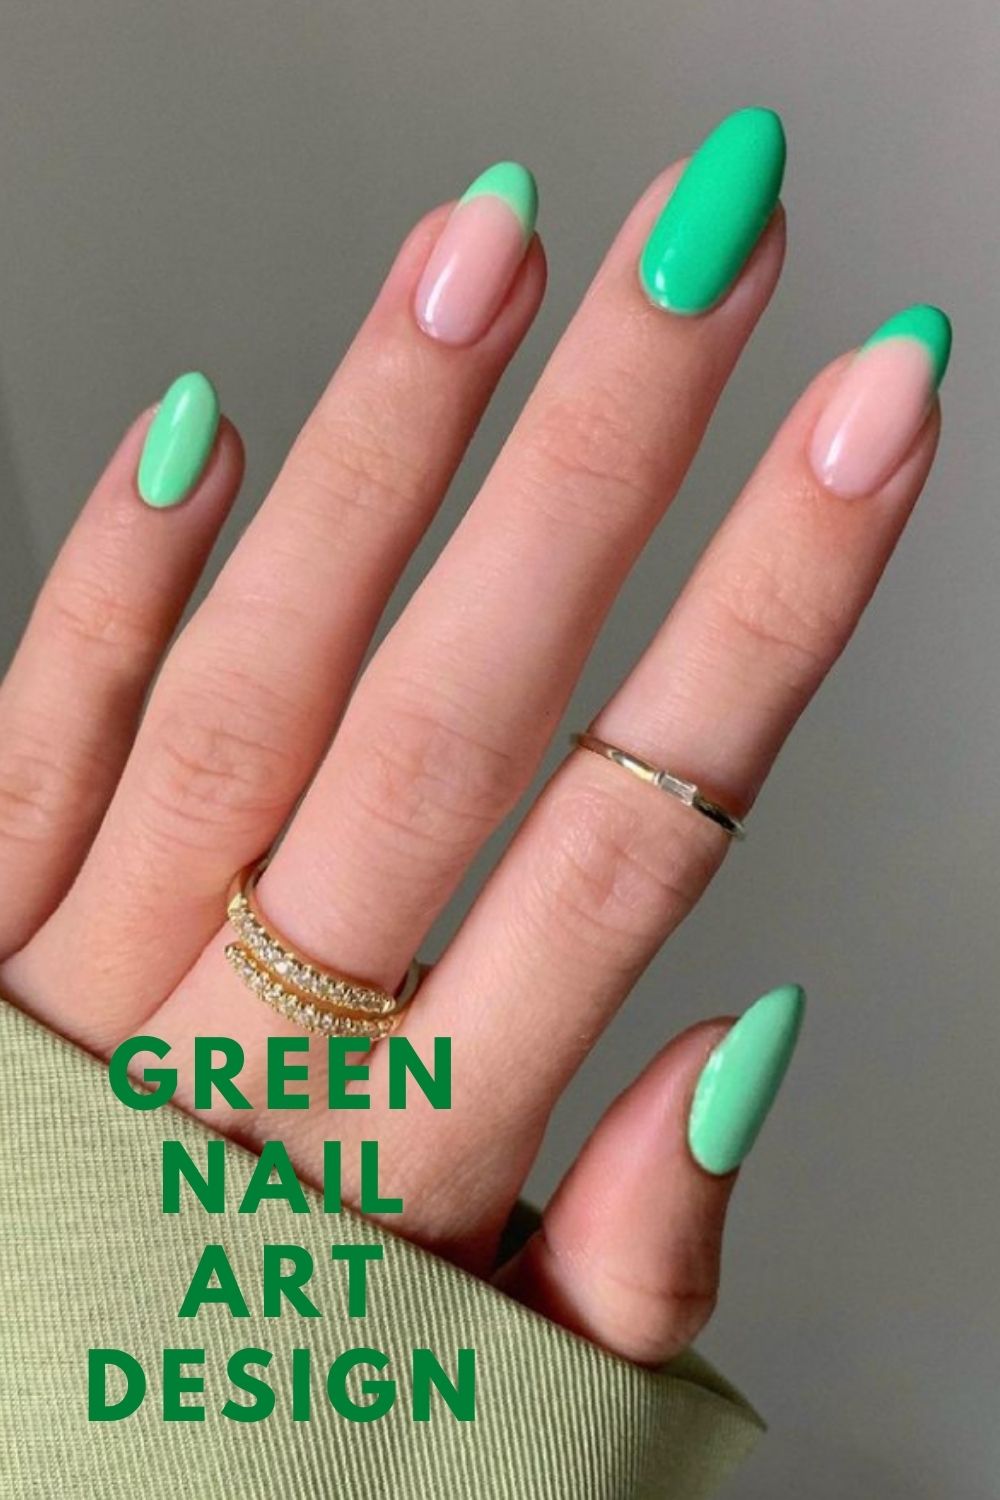 Green almond nails art designs